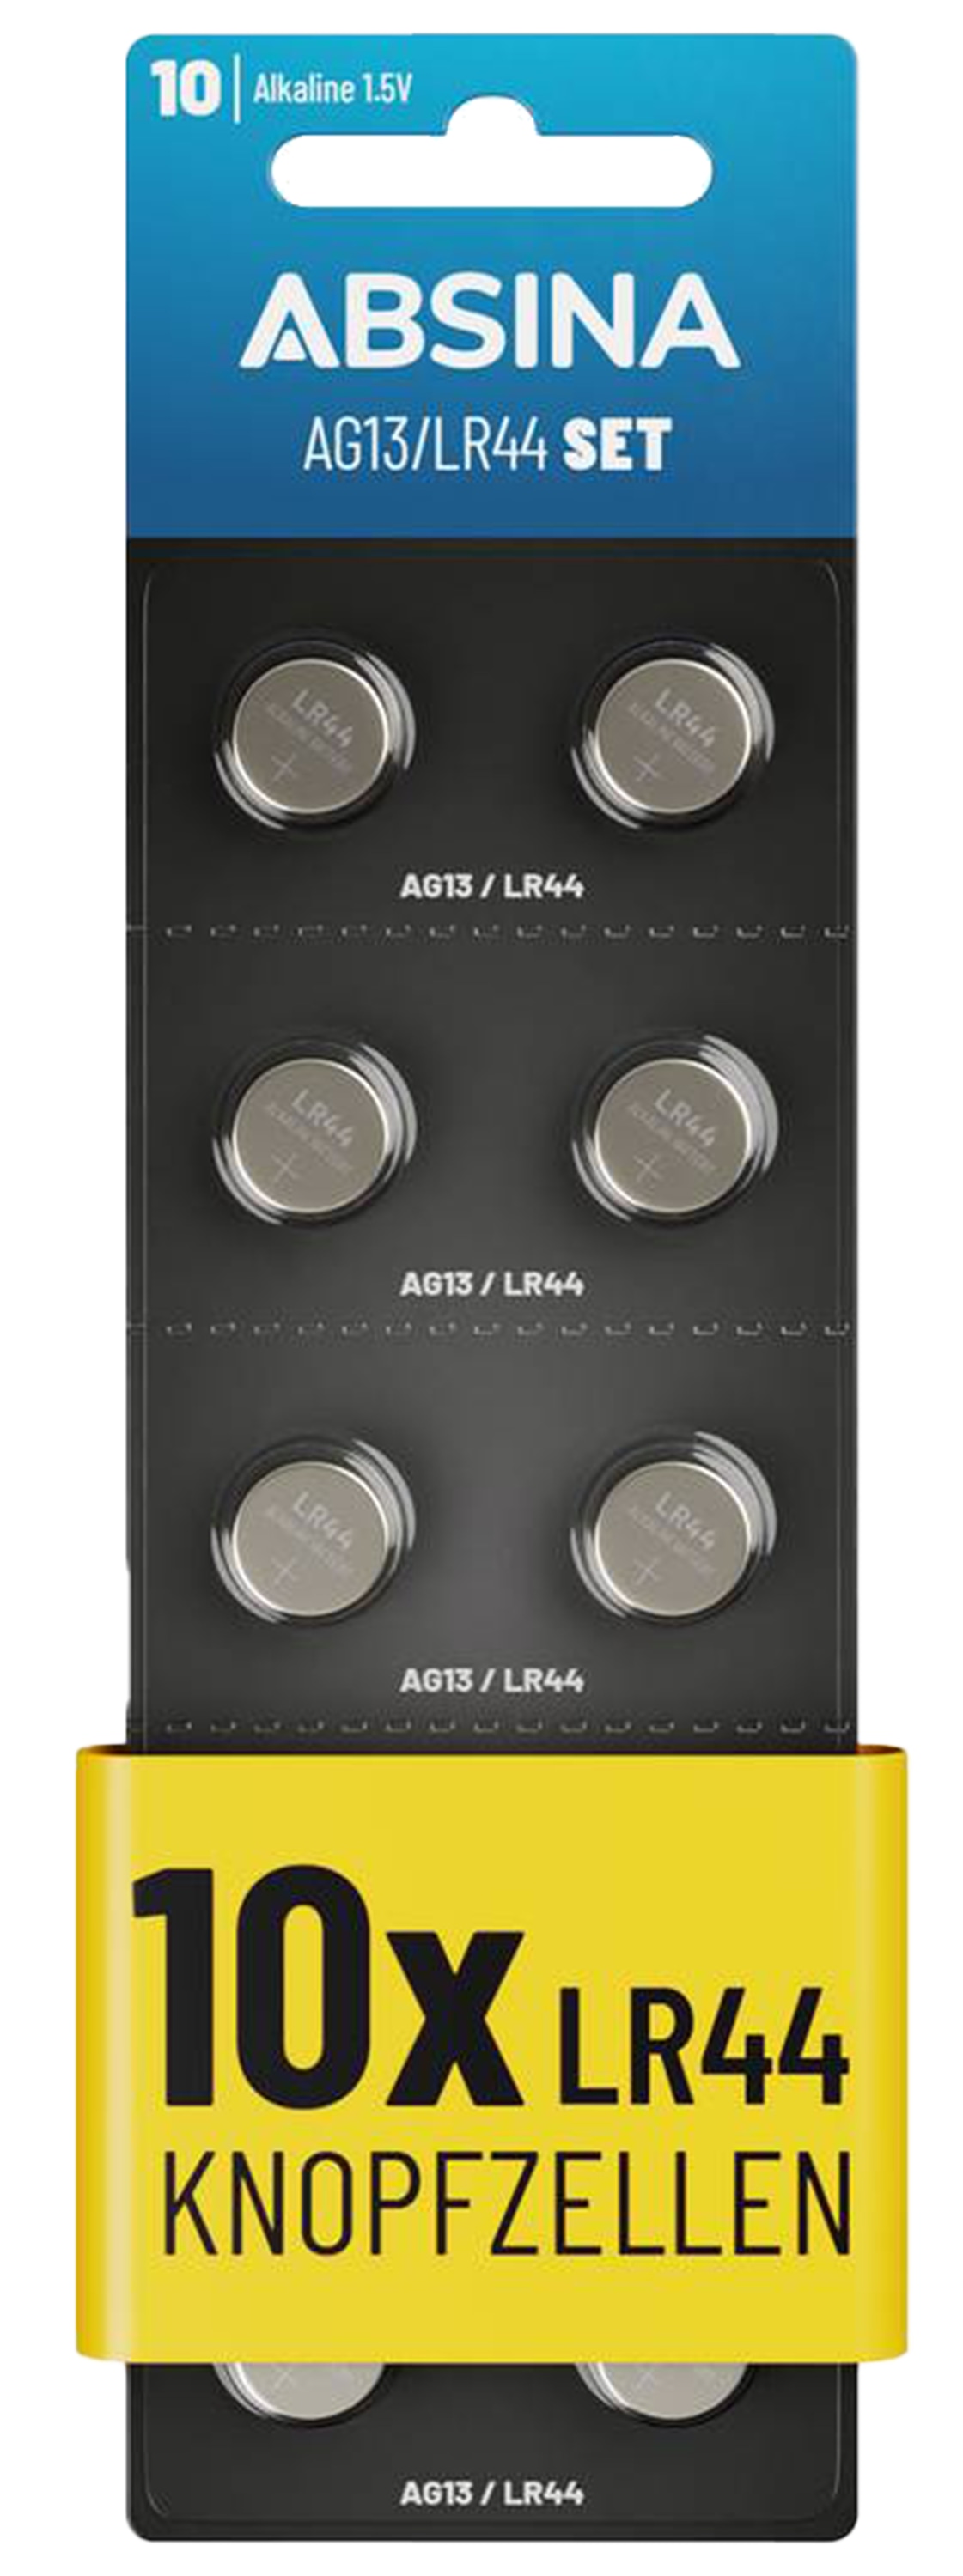 ABSINA Knopfzellen-Set AG13 / LR44, 10-teilig